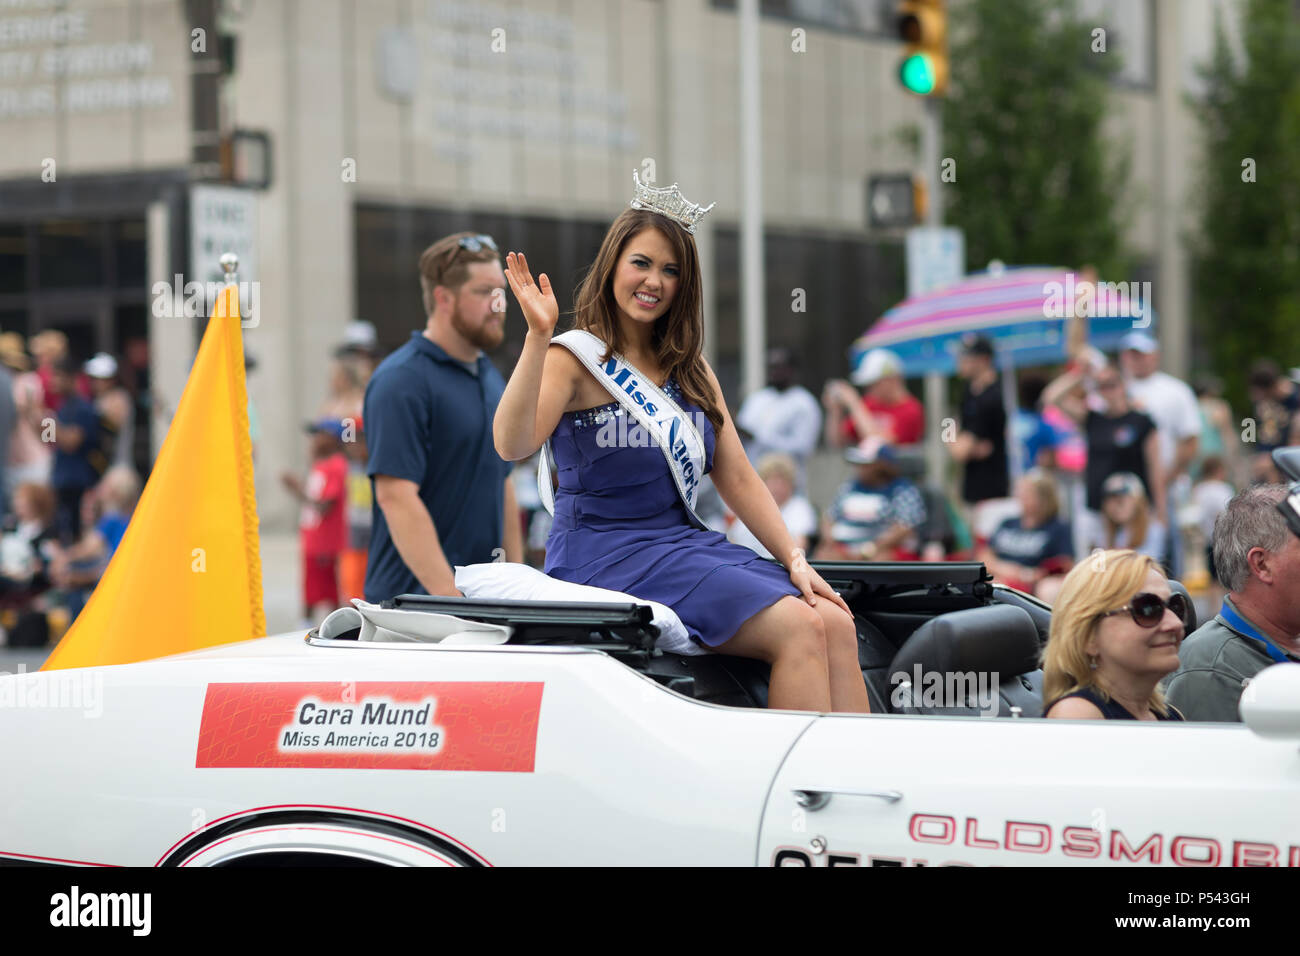 Indianapolis, Indiana, USA - 26. Mai 2018, Cara, Mund, Miss America 2018 Reiten auf einem Oldsmobile 1970 classic car, bei der Indy 500 Parade Stockfoto